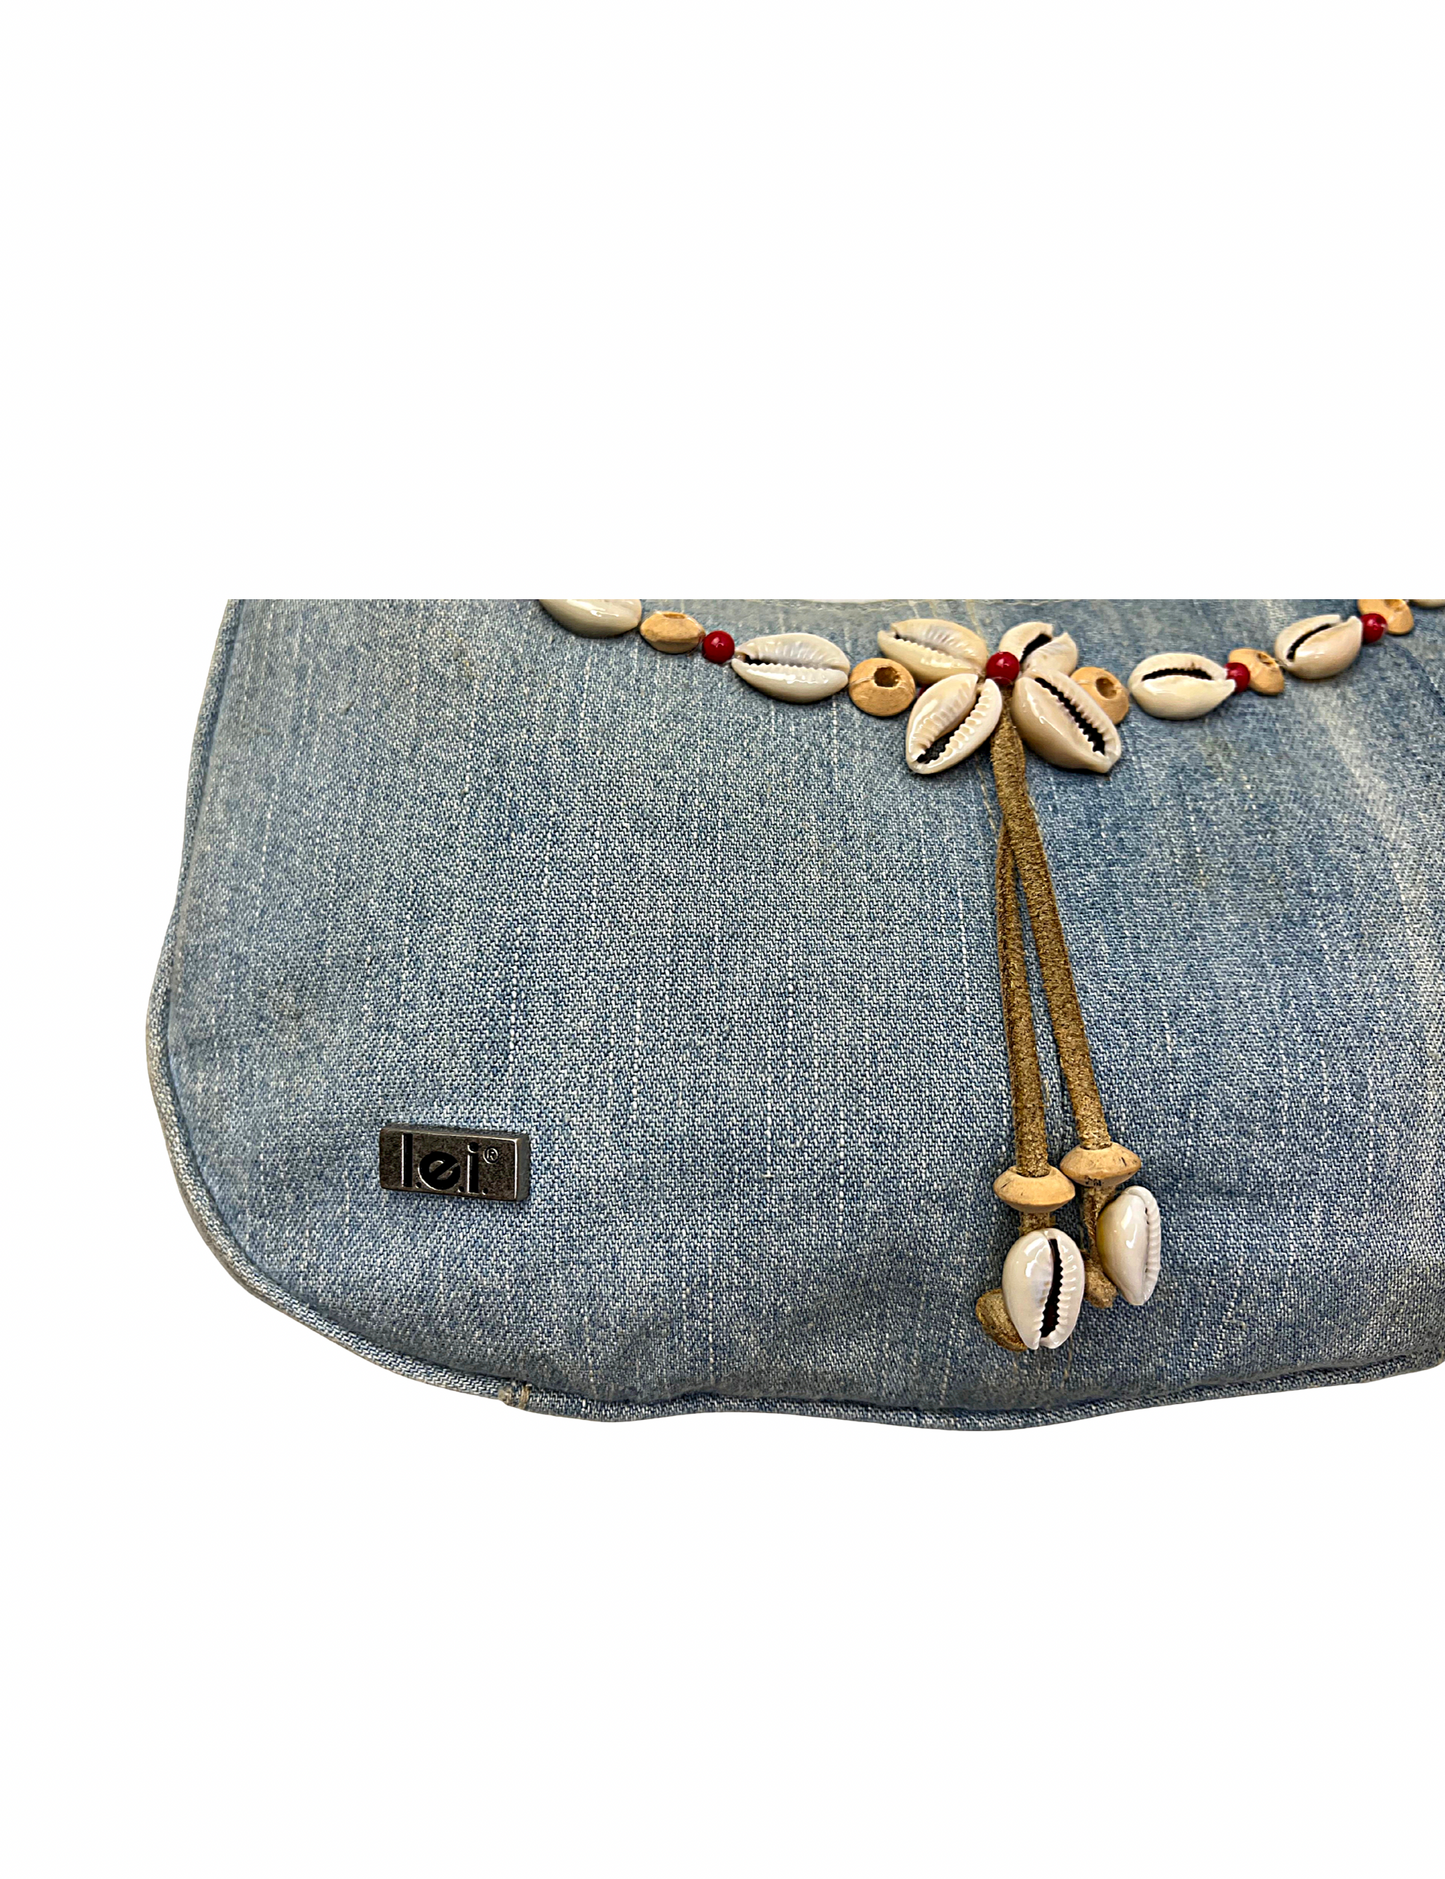 Vintage 2000’s LEI Cowrie Shell Denim Bag